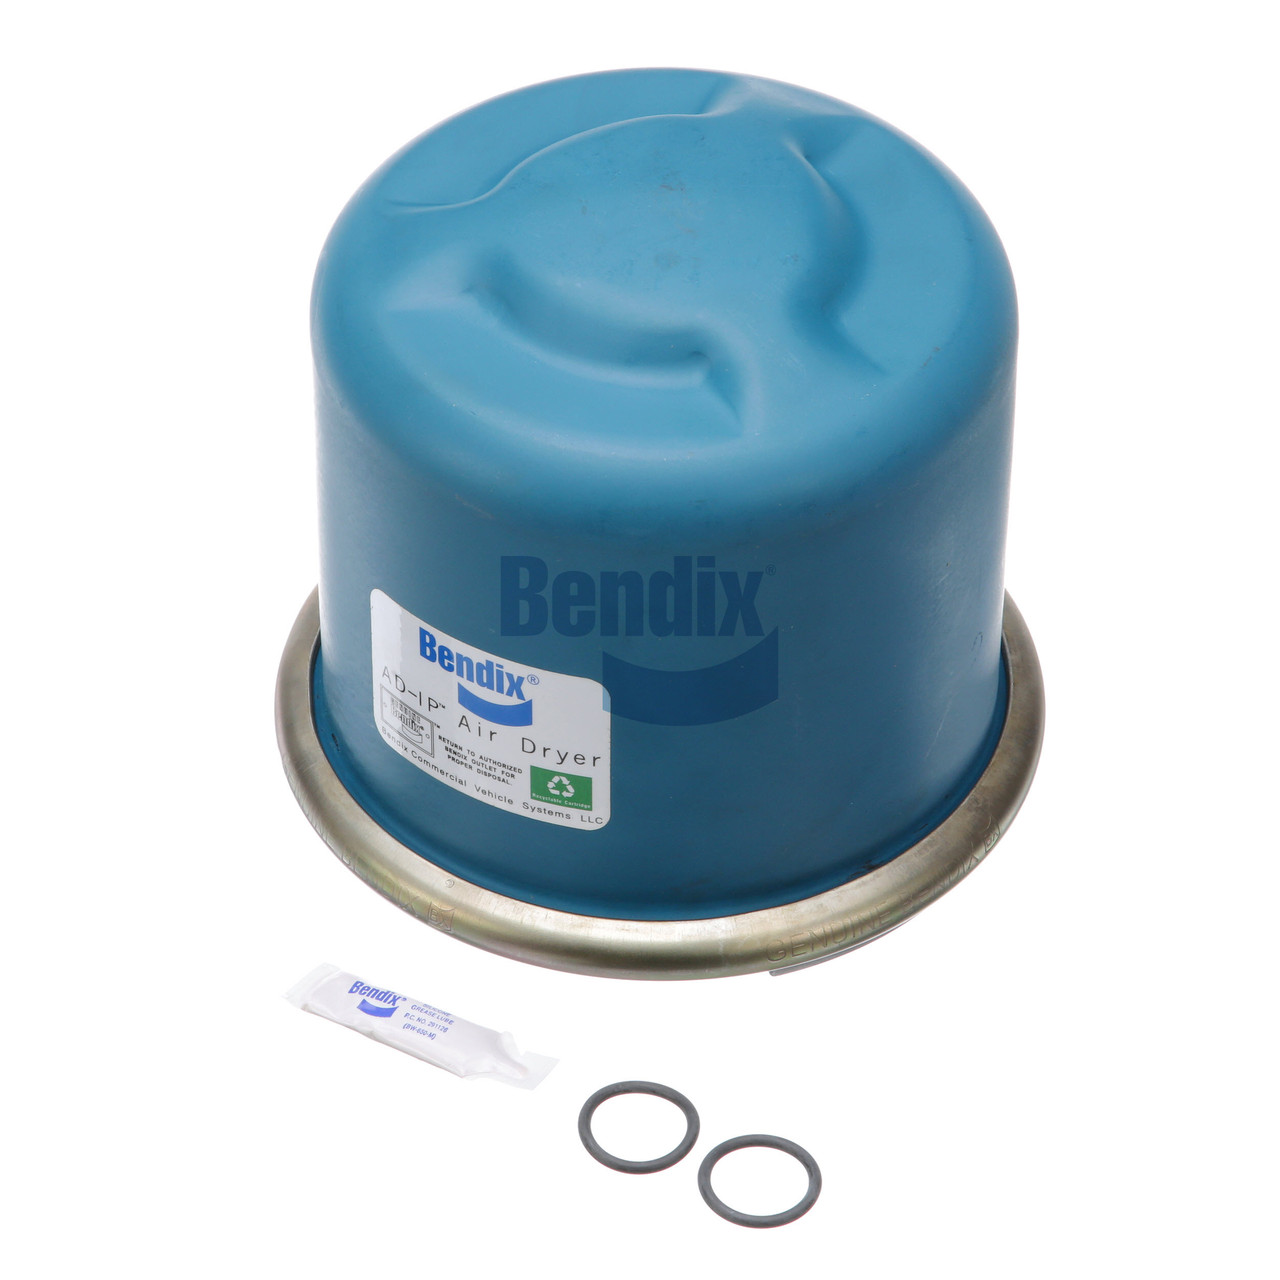 Bendix AD-IP Air Dryer Cartridge- Reman *Genuine Bendix* 109493 - Replaces 065624